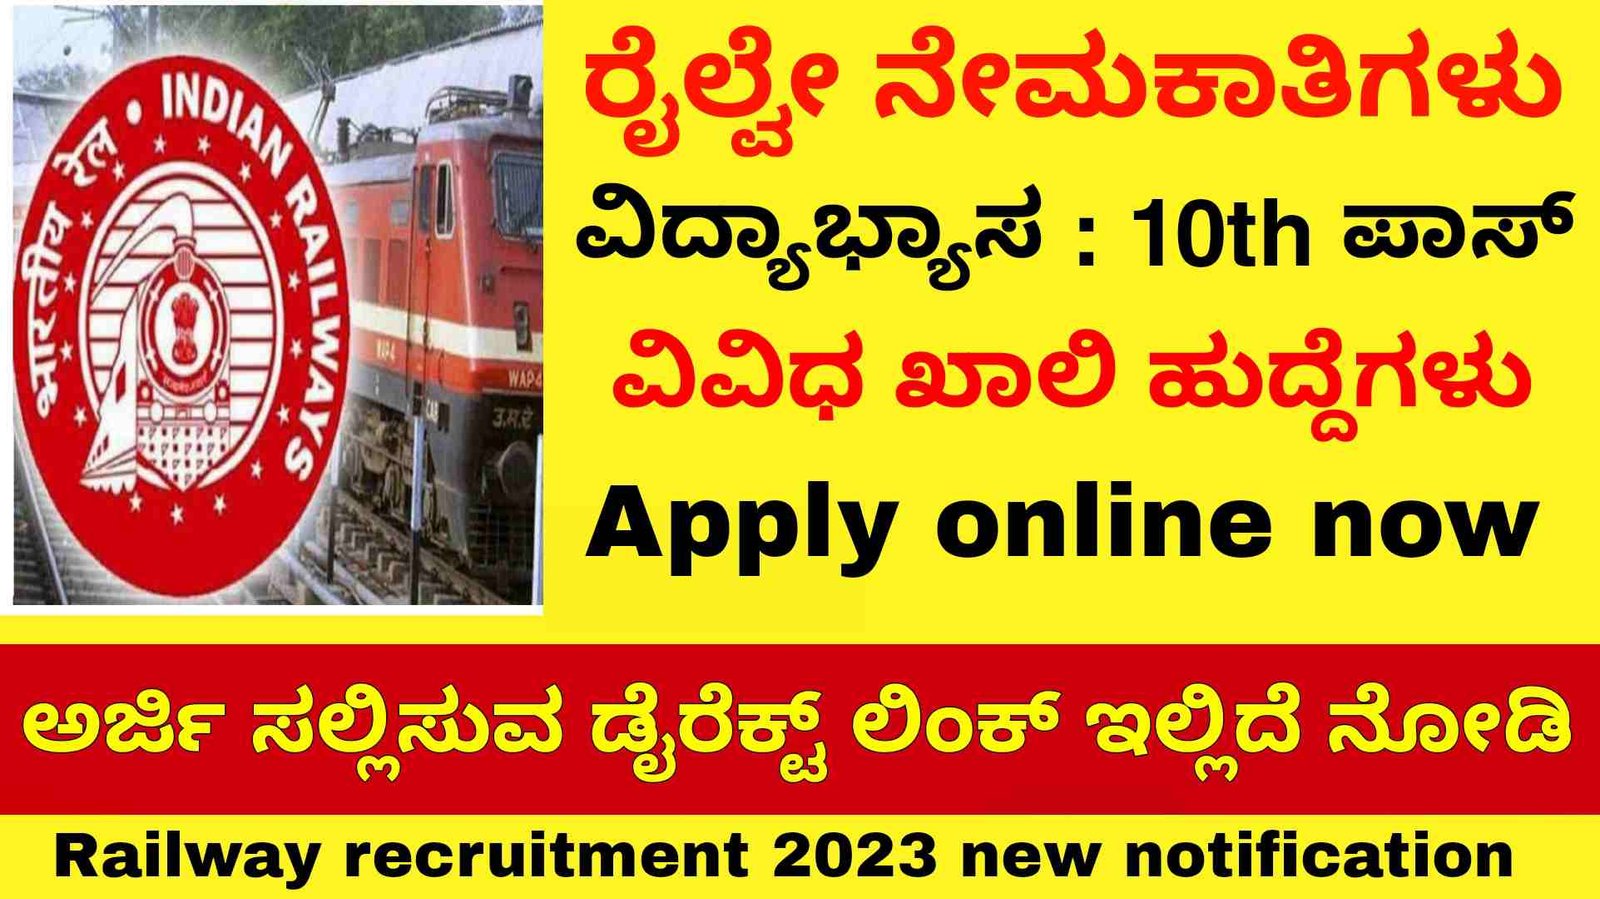 Railway recruitment 2023